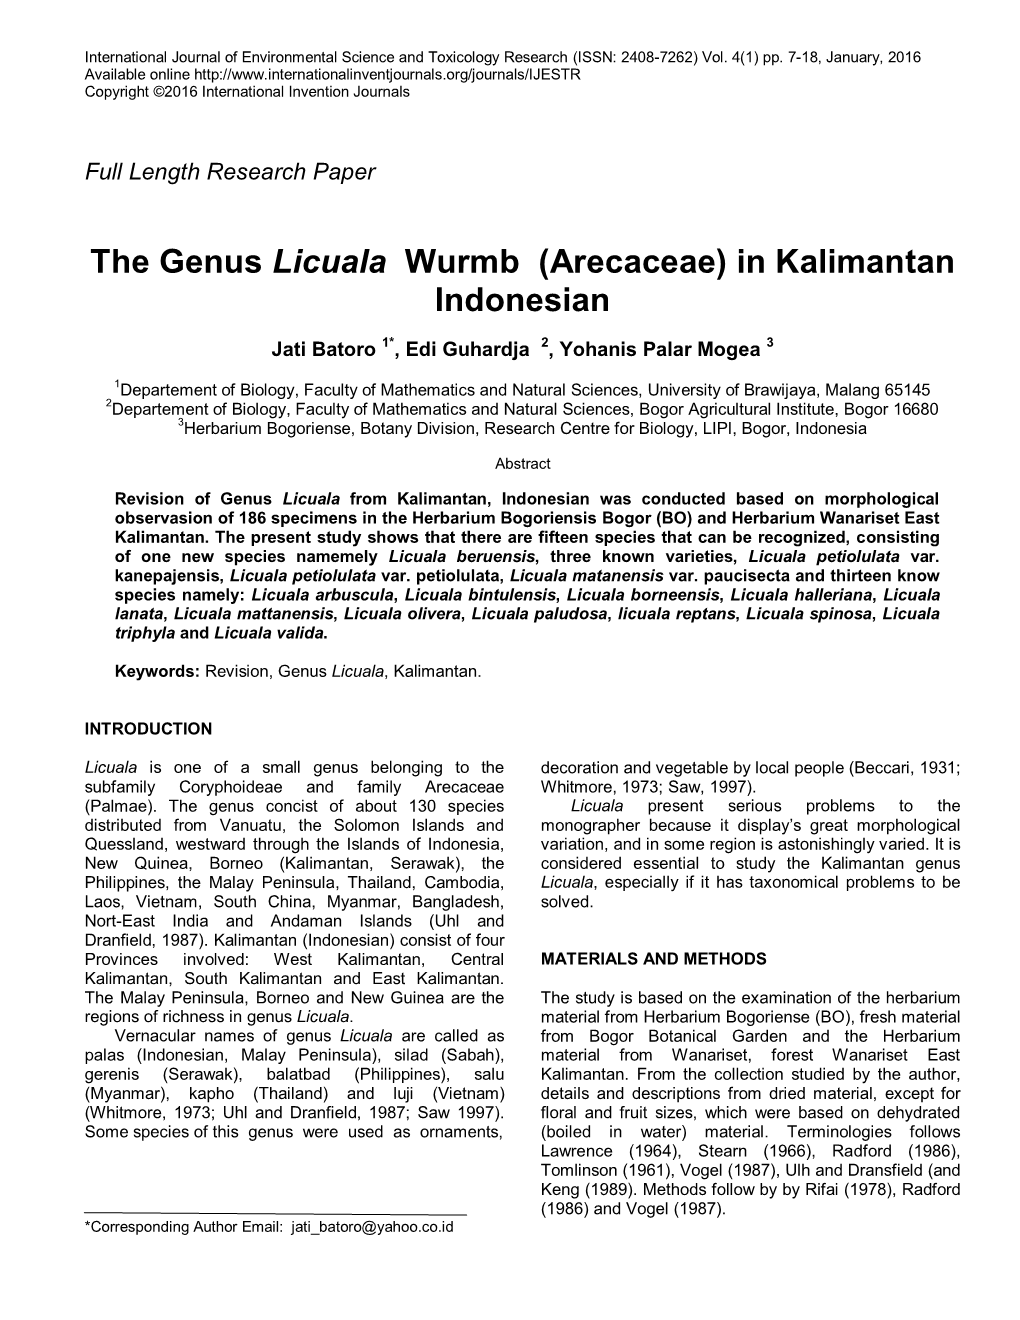 The Genus Licuala Wurmb (Arecaceae) in Kalimantan Indonesian